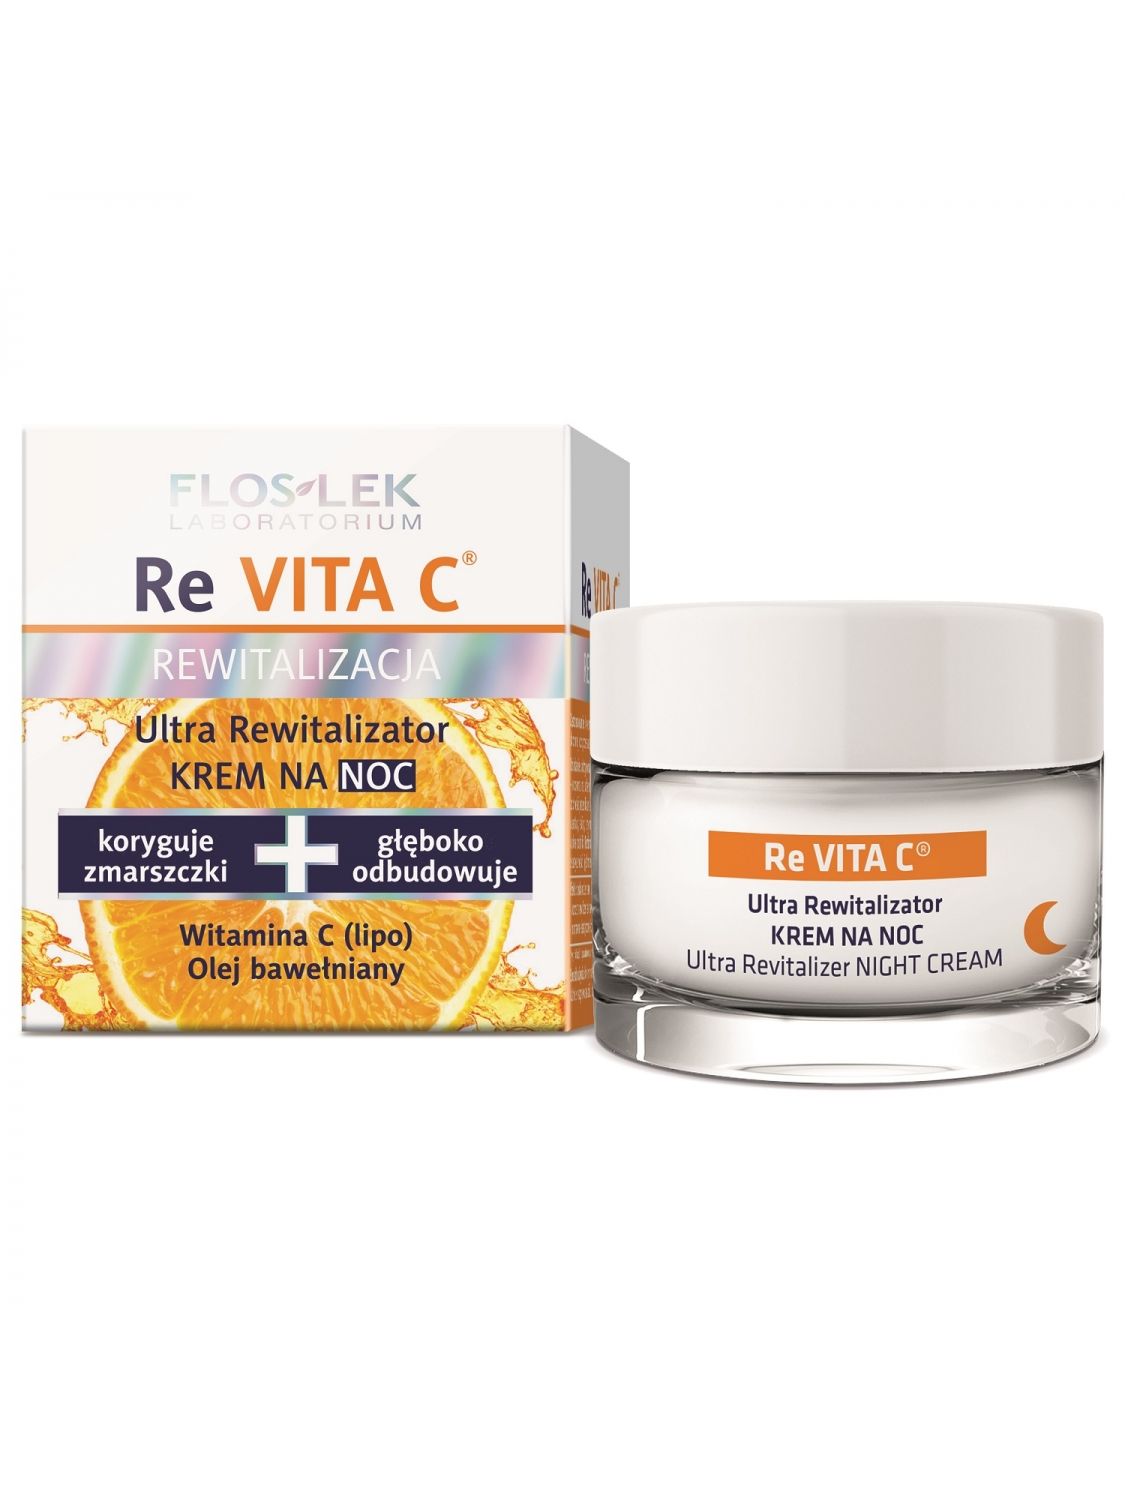 ReVITA C® Ultra Revitalizer night cream - 50 ml - Floslek